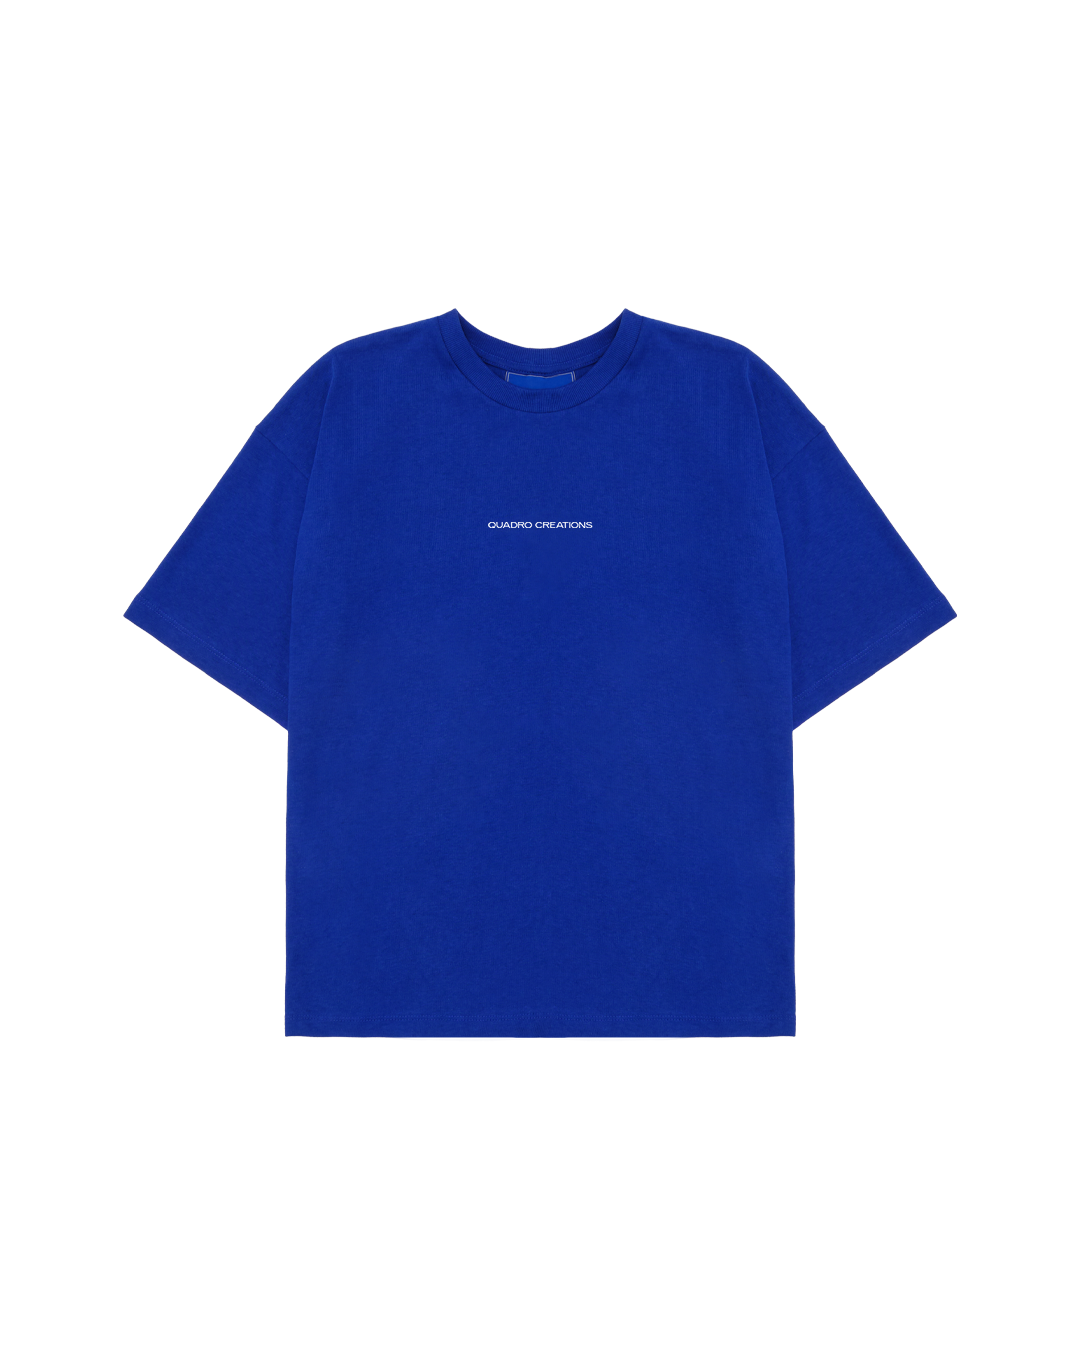 QUADRO CREATIONS - Camiseta Name Logo Blue - Slow Office